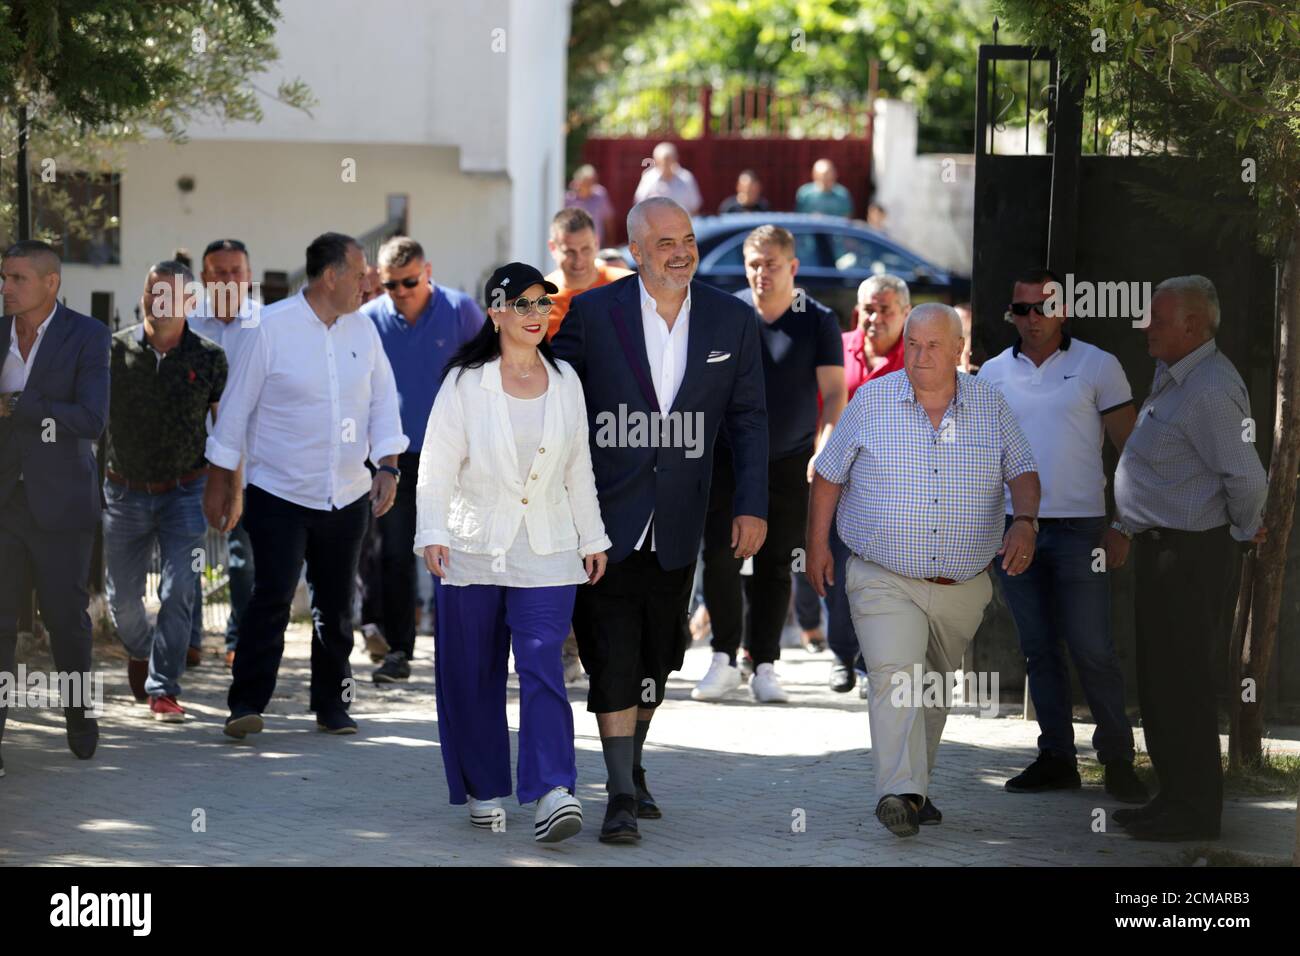 Albania's Prime Minister Edi Rama and his wife Linda Rama arrive at the  polling station near Tirana, Albania June 30, 2019. REUTERS/Florion Goga  Stock Photo - Alamy